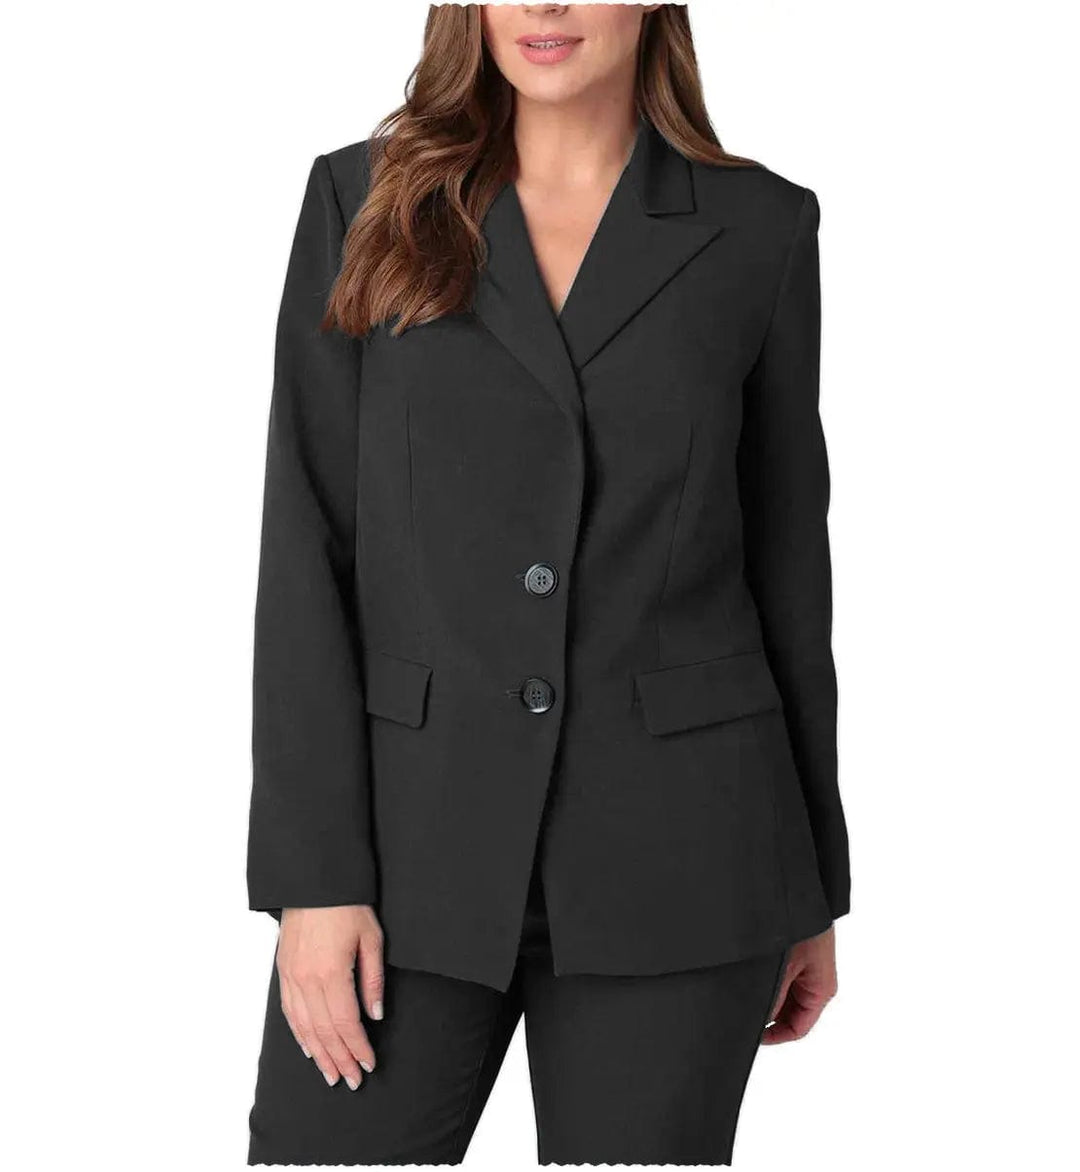 solovedress Formal Flat Peak Lapel Blazer 2 Pieces Women Suit